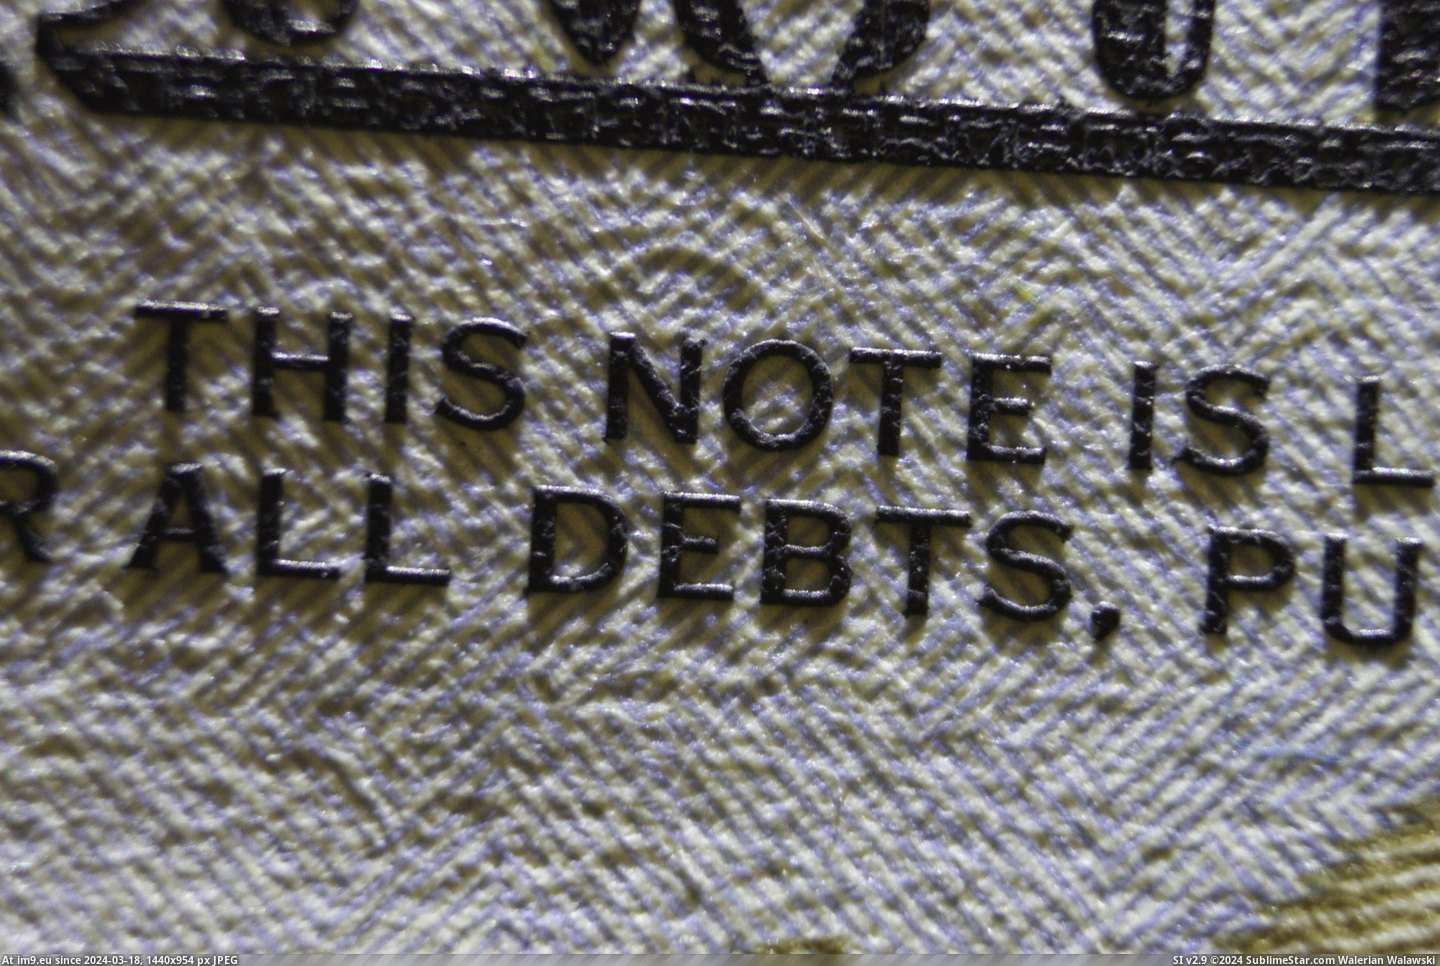 #Bill #Ink #Dollar [Pics] Ink thickness on a US dollar bill Pic. (Изображение из альбом My r/PICS favs))